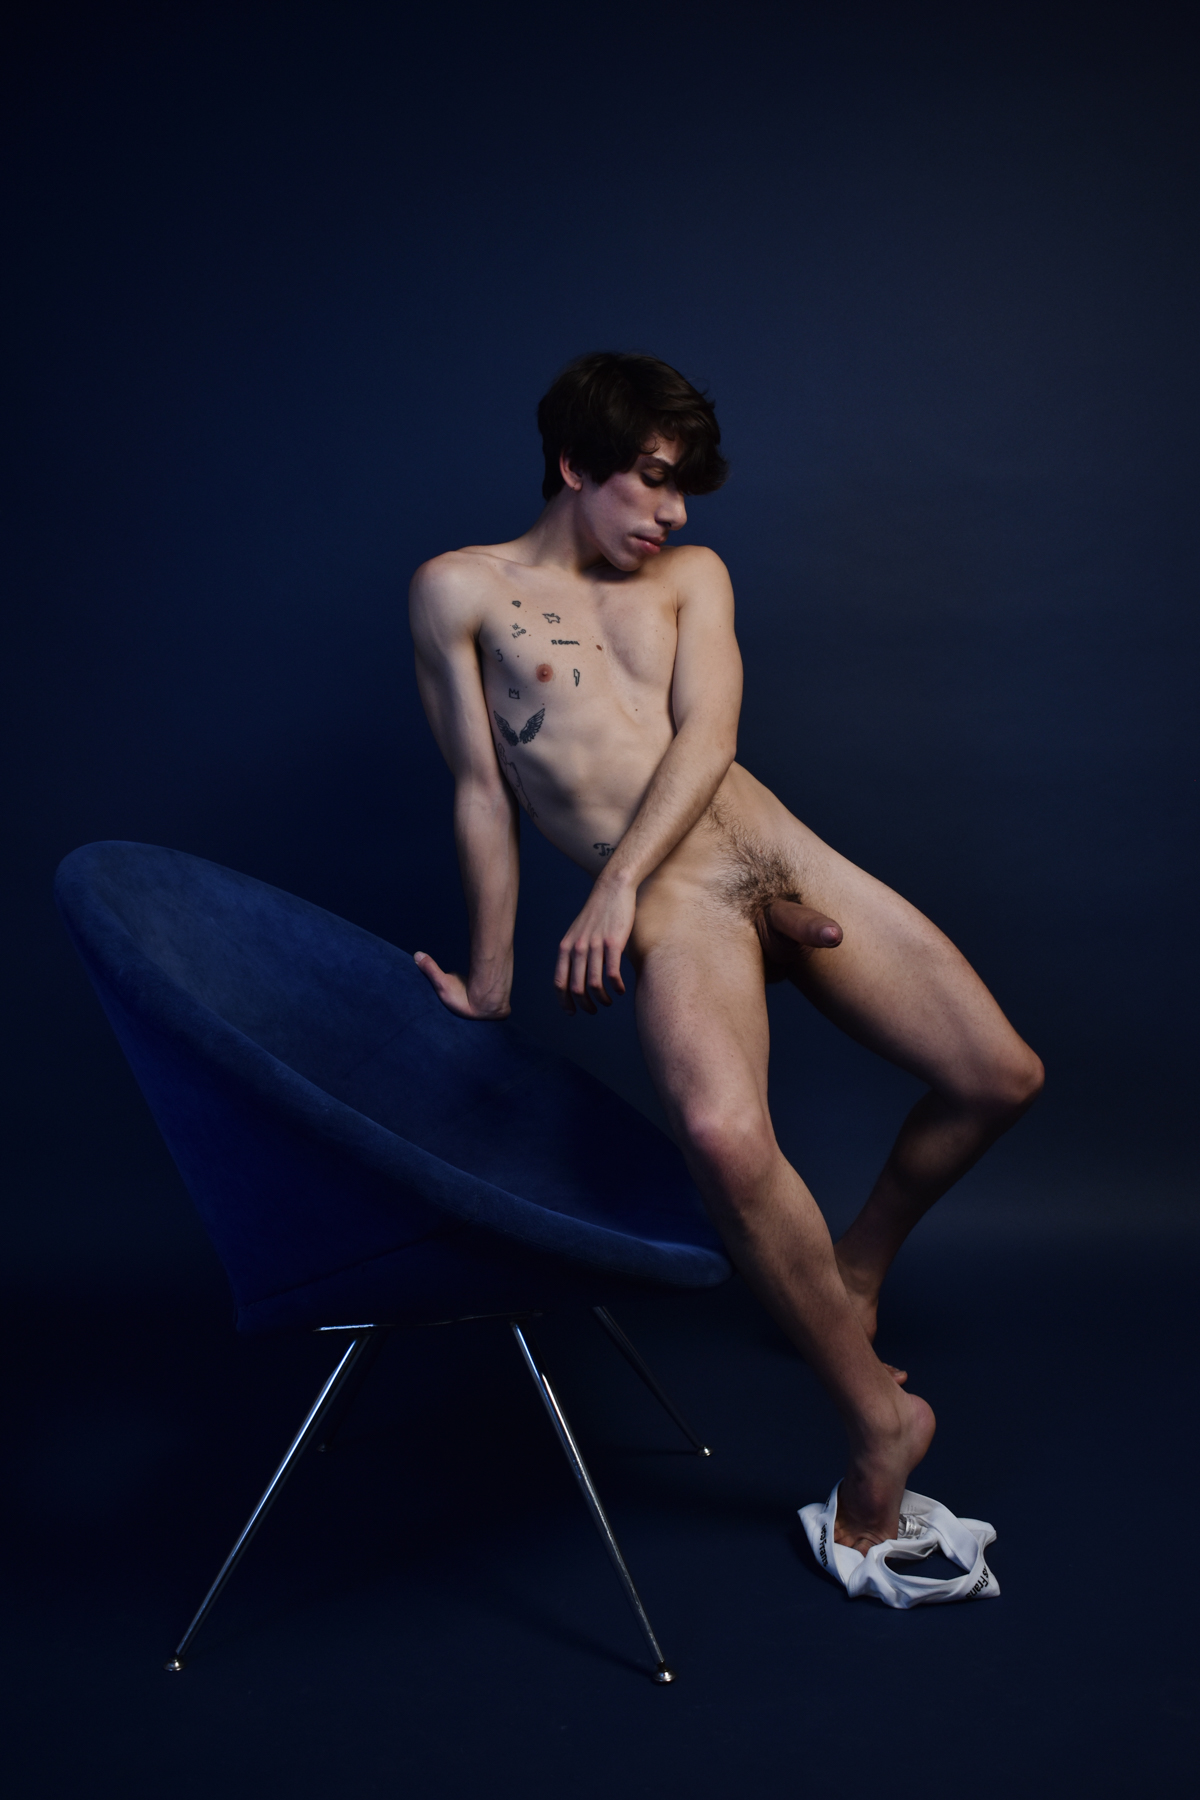 Bruno d luca - nude photos